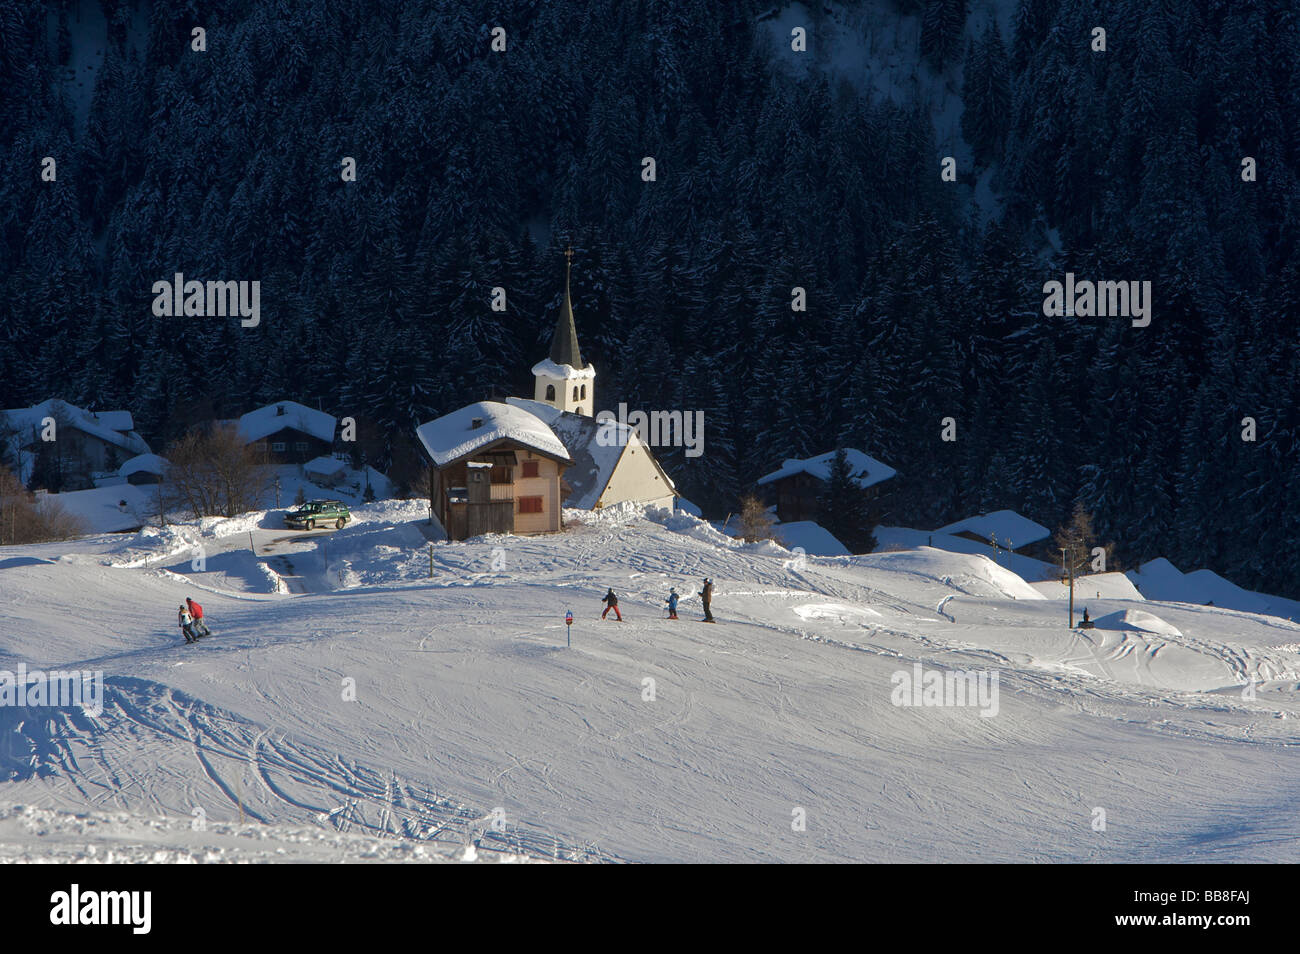 Small skiing area near Tschappina, Thusis, canton of Graubuenden, Switzerland, Europe Stock Photo